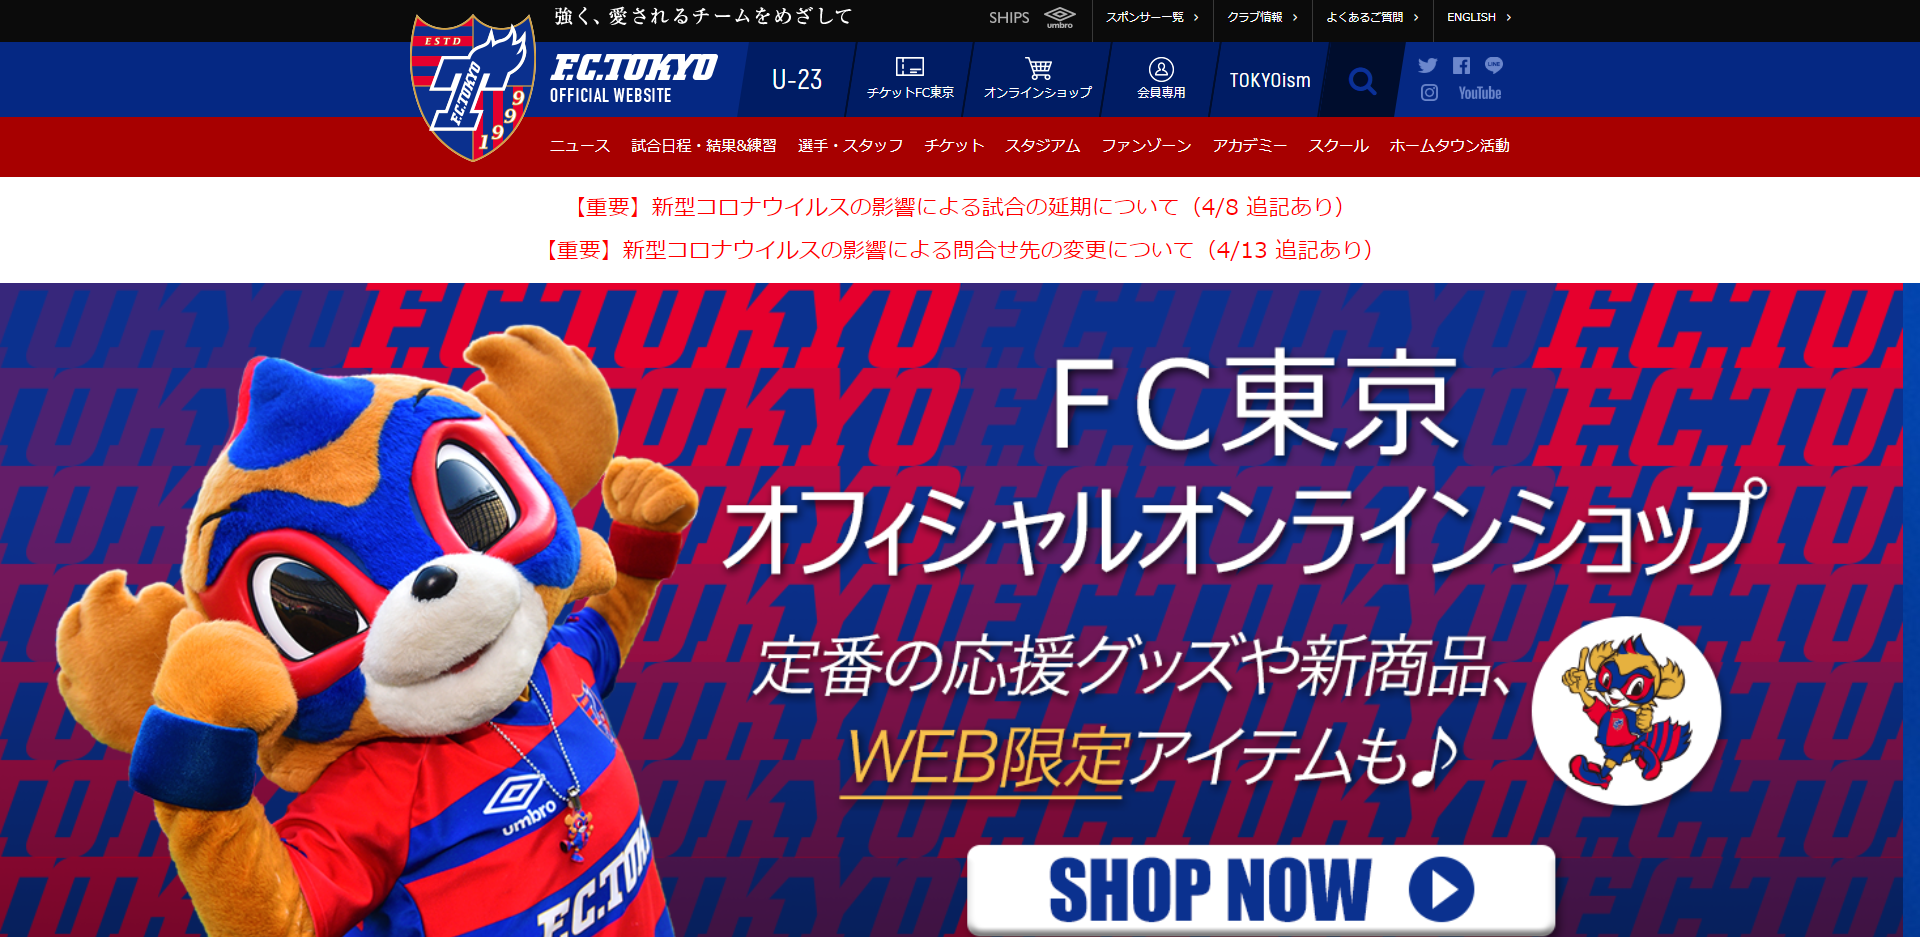 FireShot Capture 006 - FC東京オフィシャルホームページ - F.C.TOKYO - www.fctokyo.co.jp.png